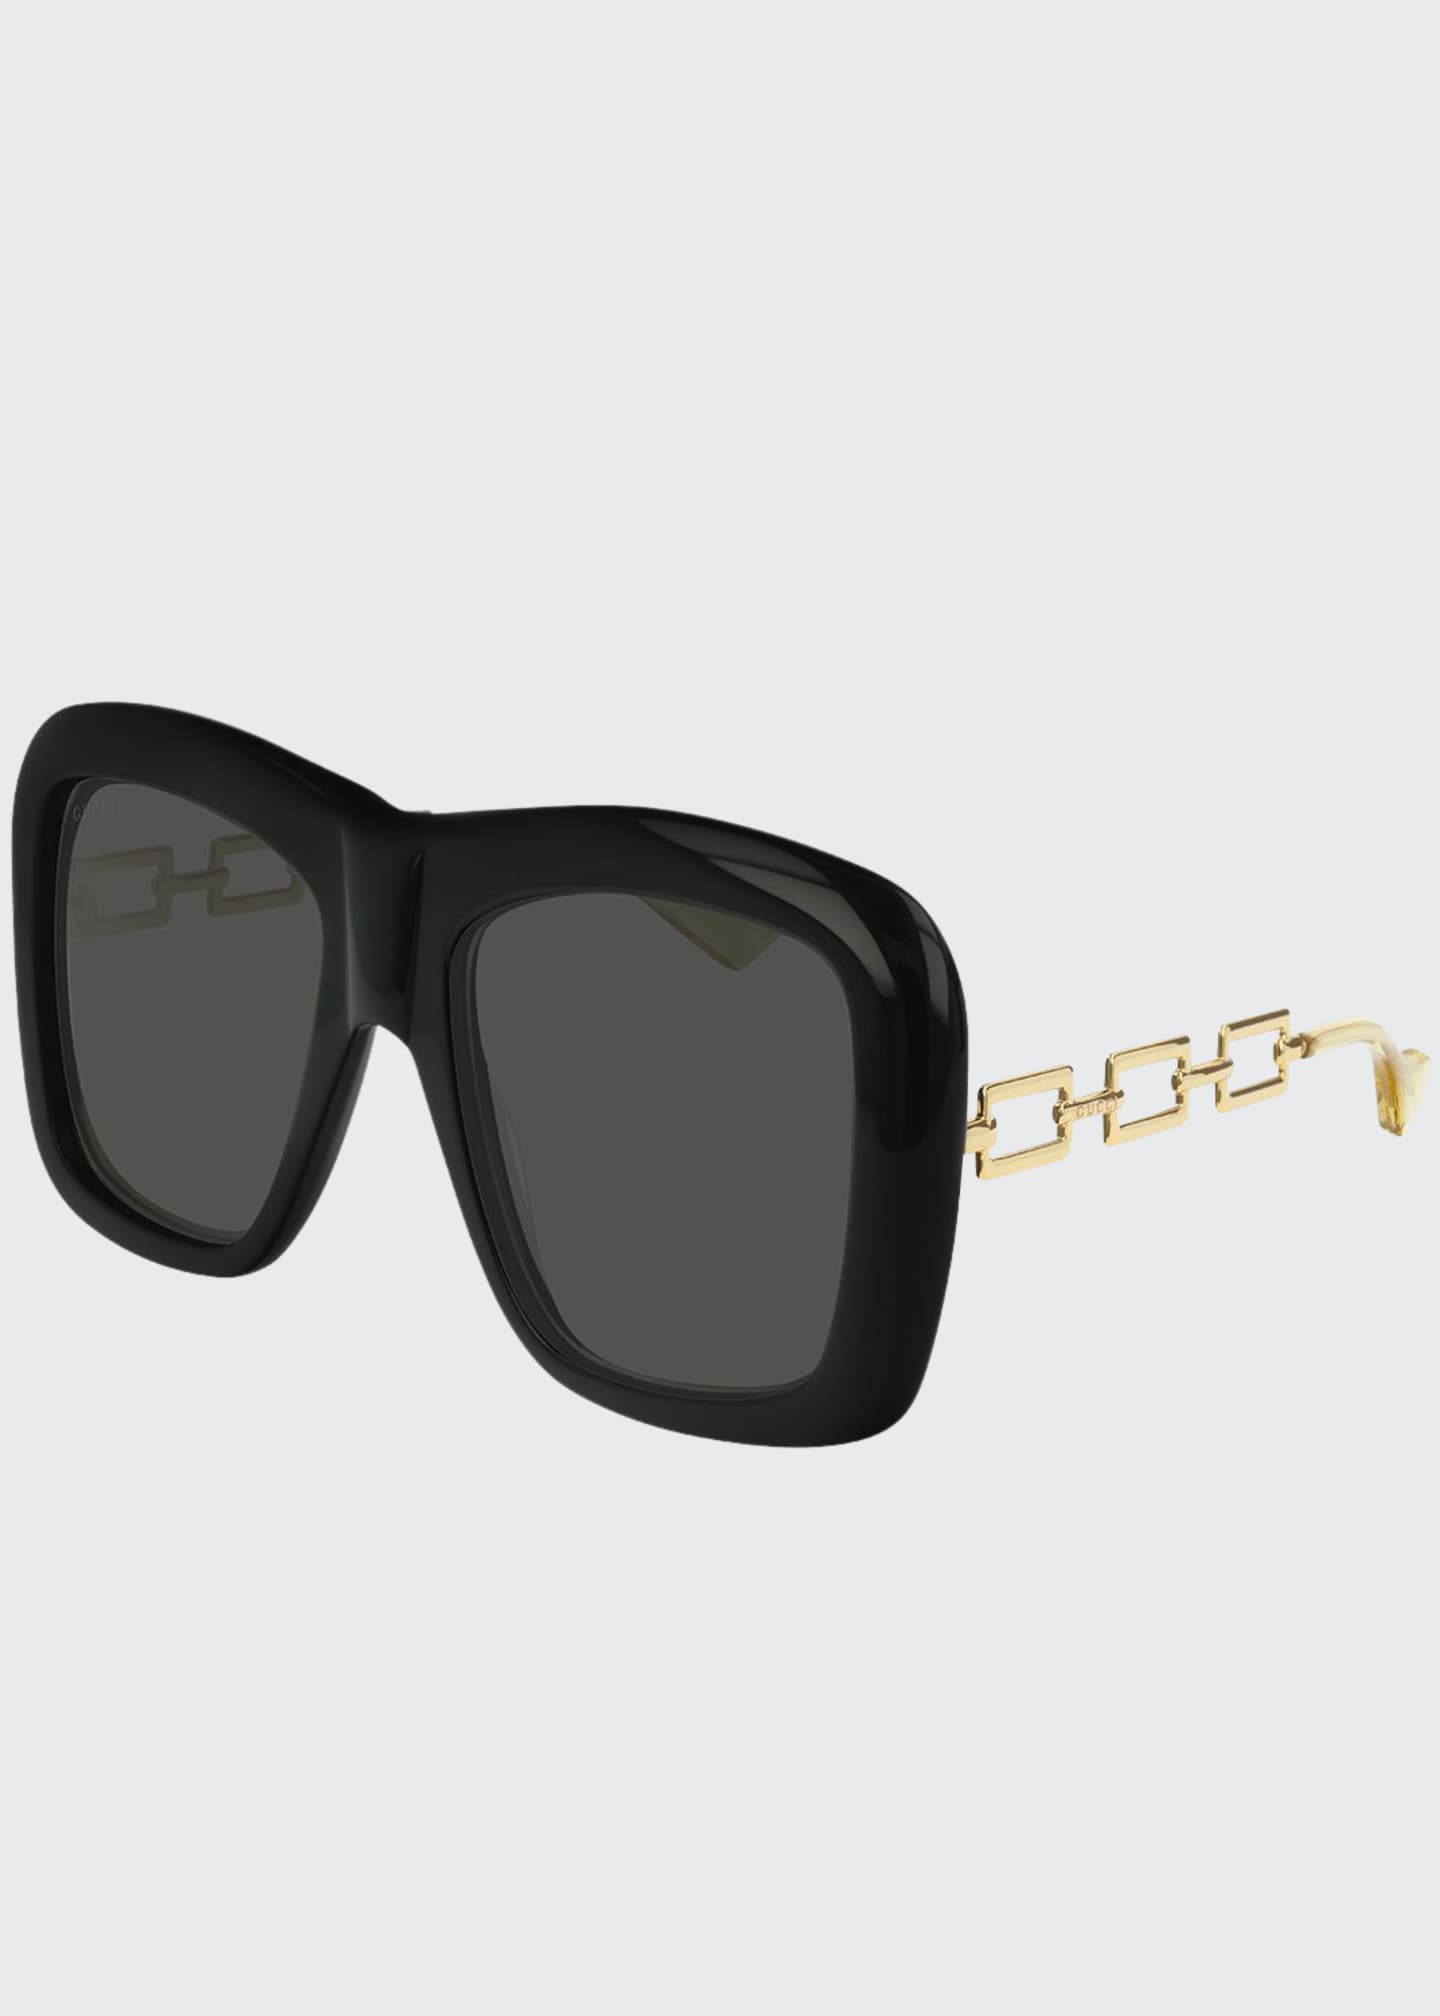 Gucci Square Acetate Sunglasses W Metal Chain Arms Bergdorf Goodman